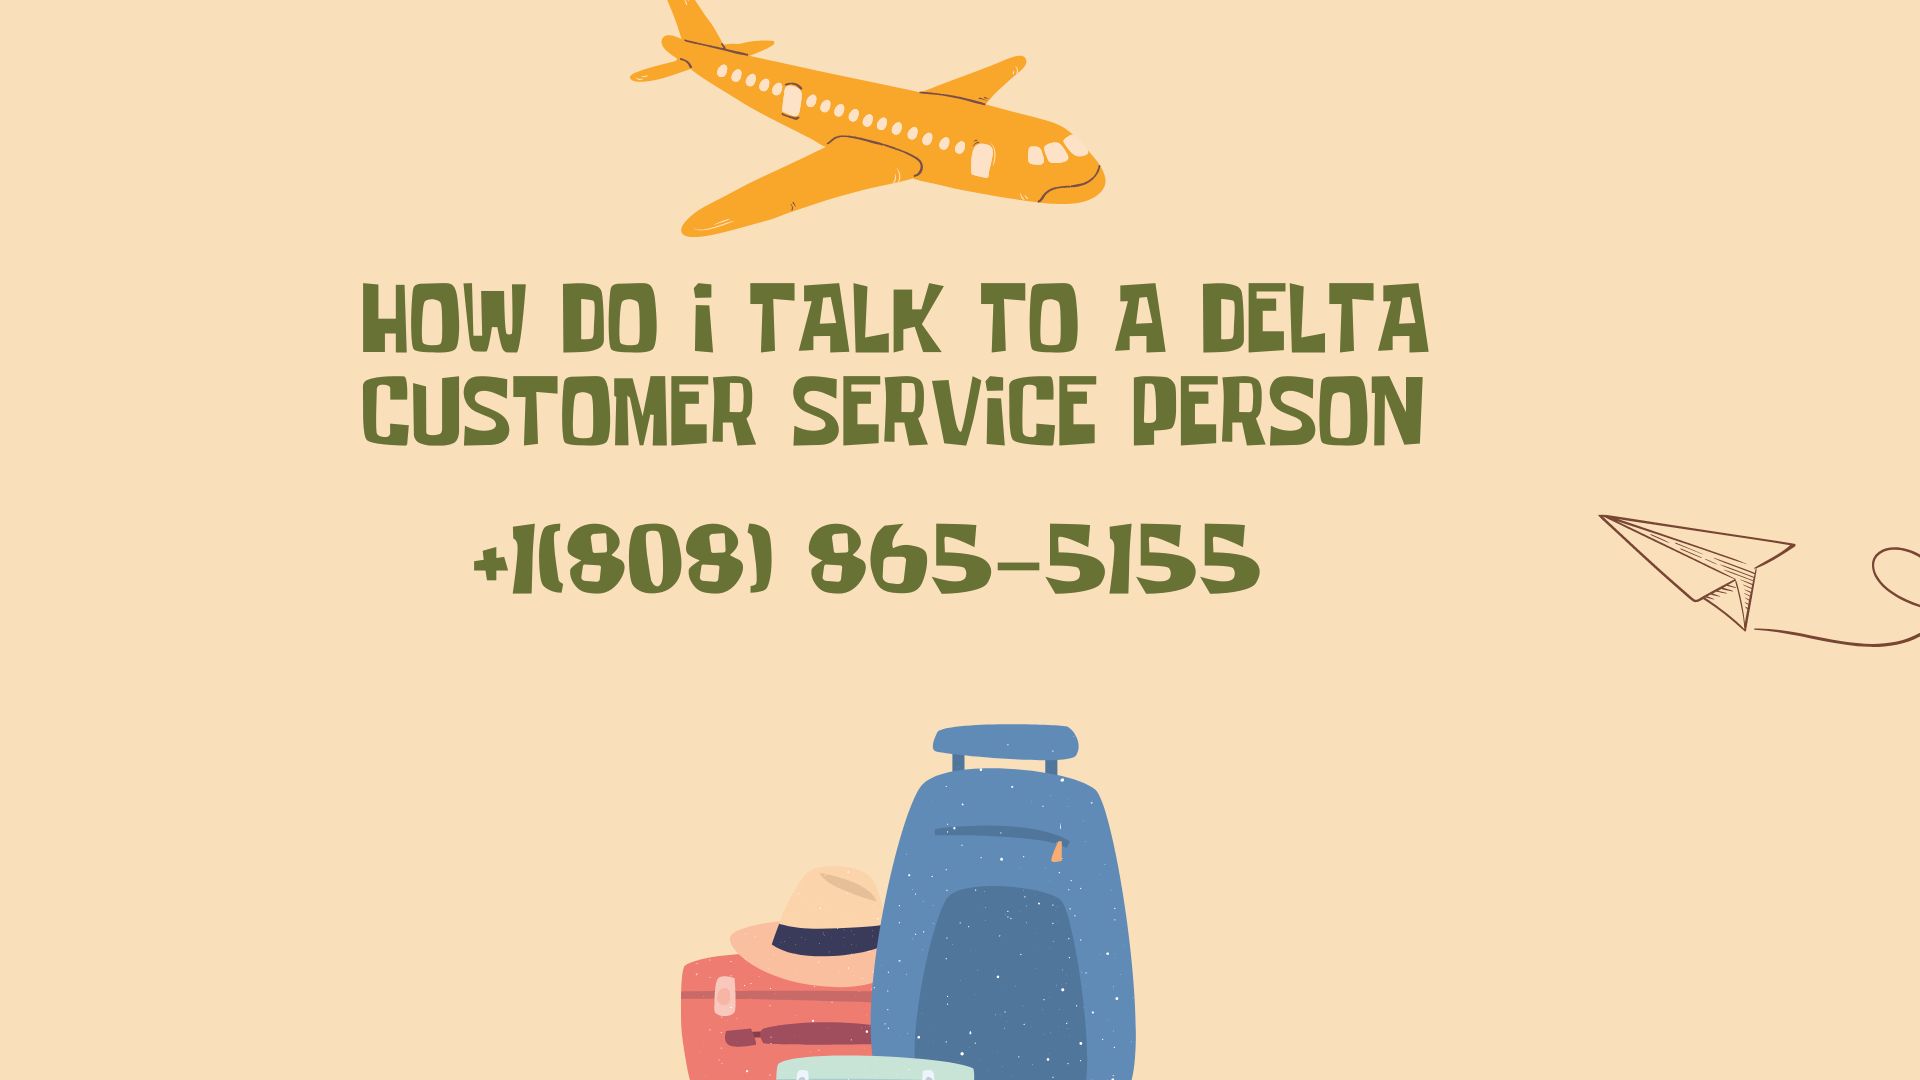 How do I talk to a Delta customer service person